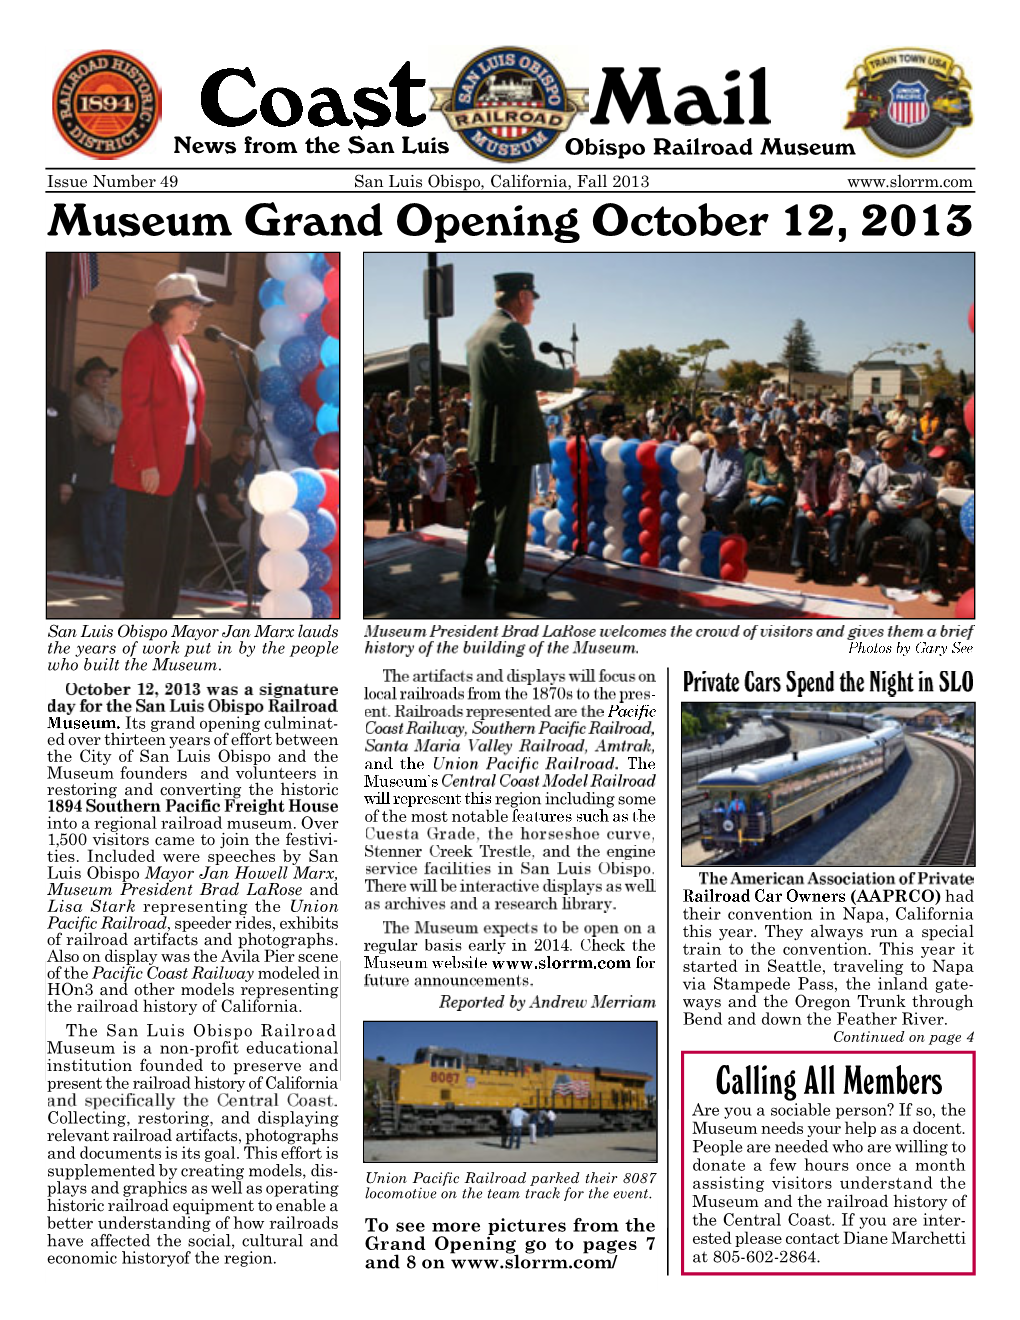 Museum Grand Opening October 12, 2013